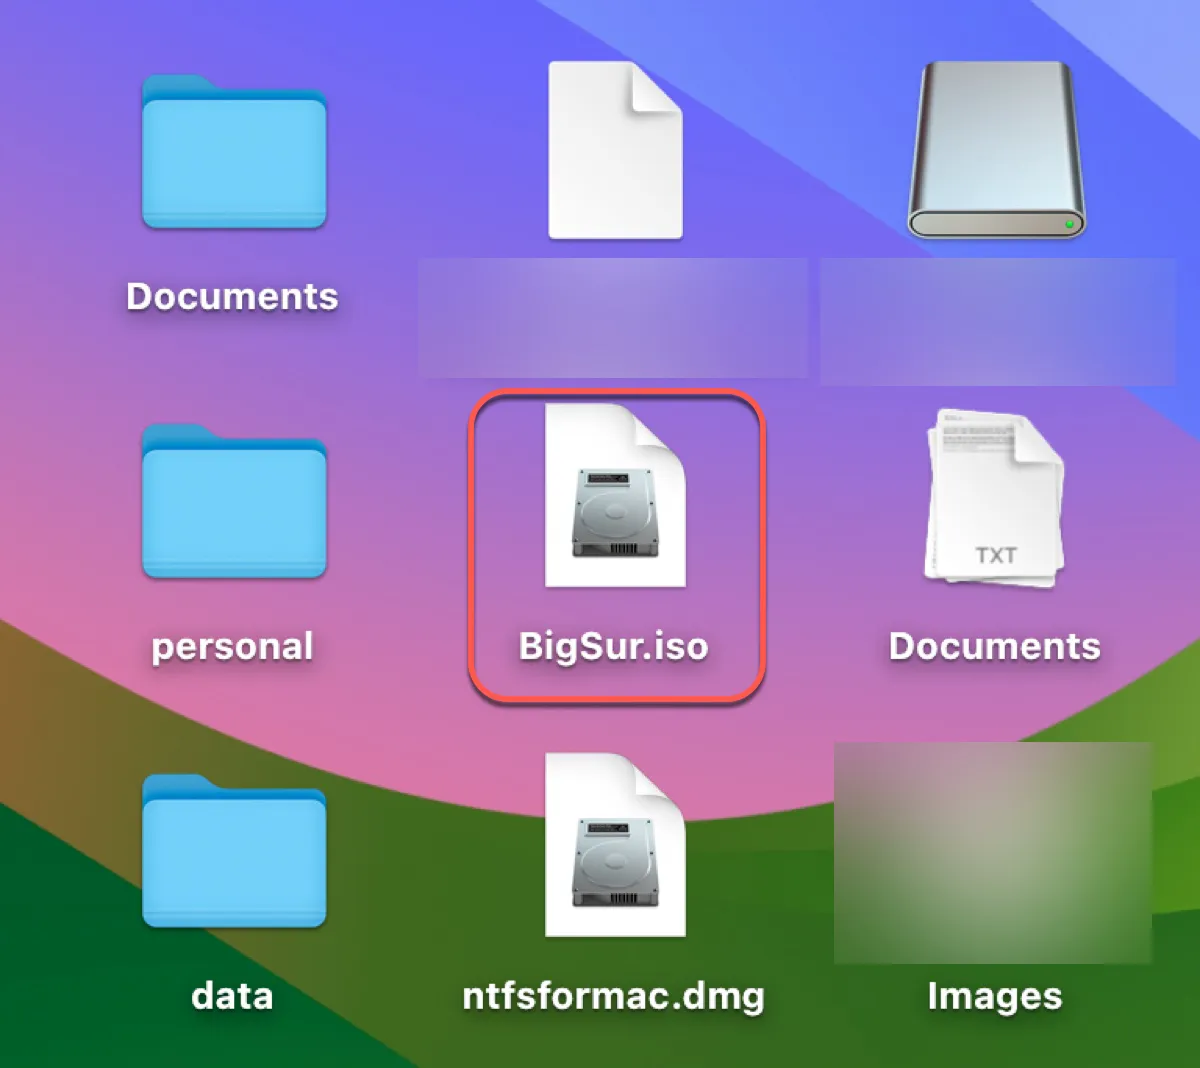 The final macOS Big Sur ISO file on the desktop